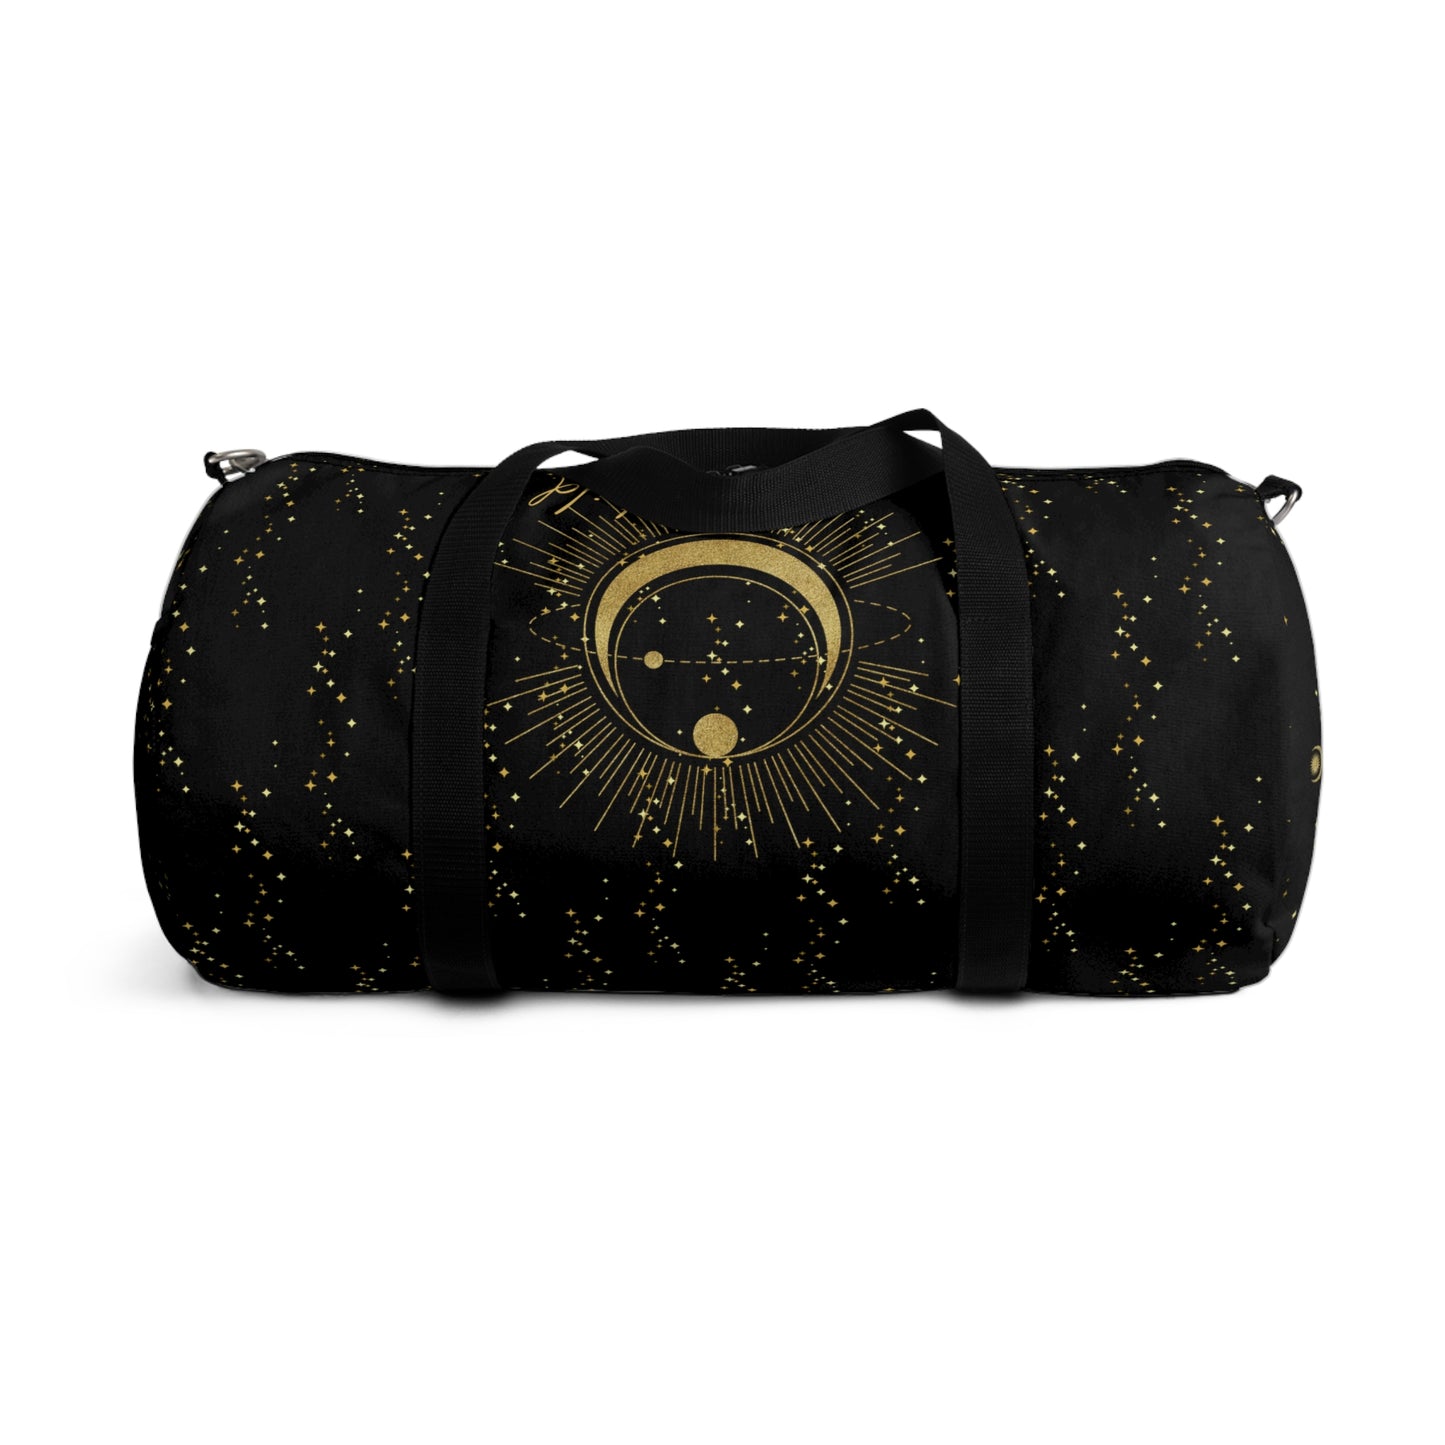 Celestial Dreams Moon Child Starry Duffel Bag